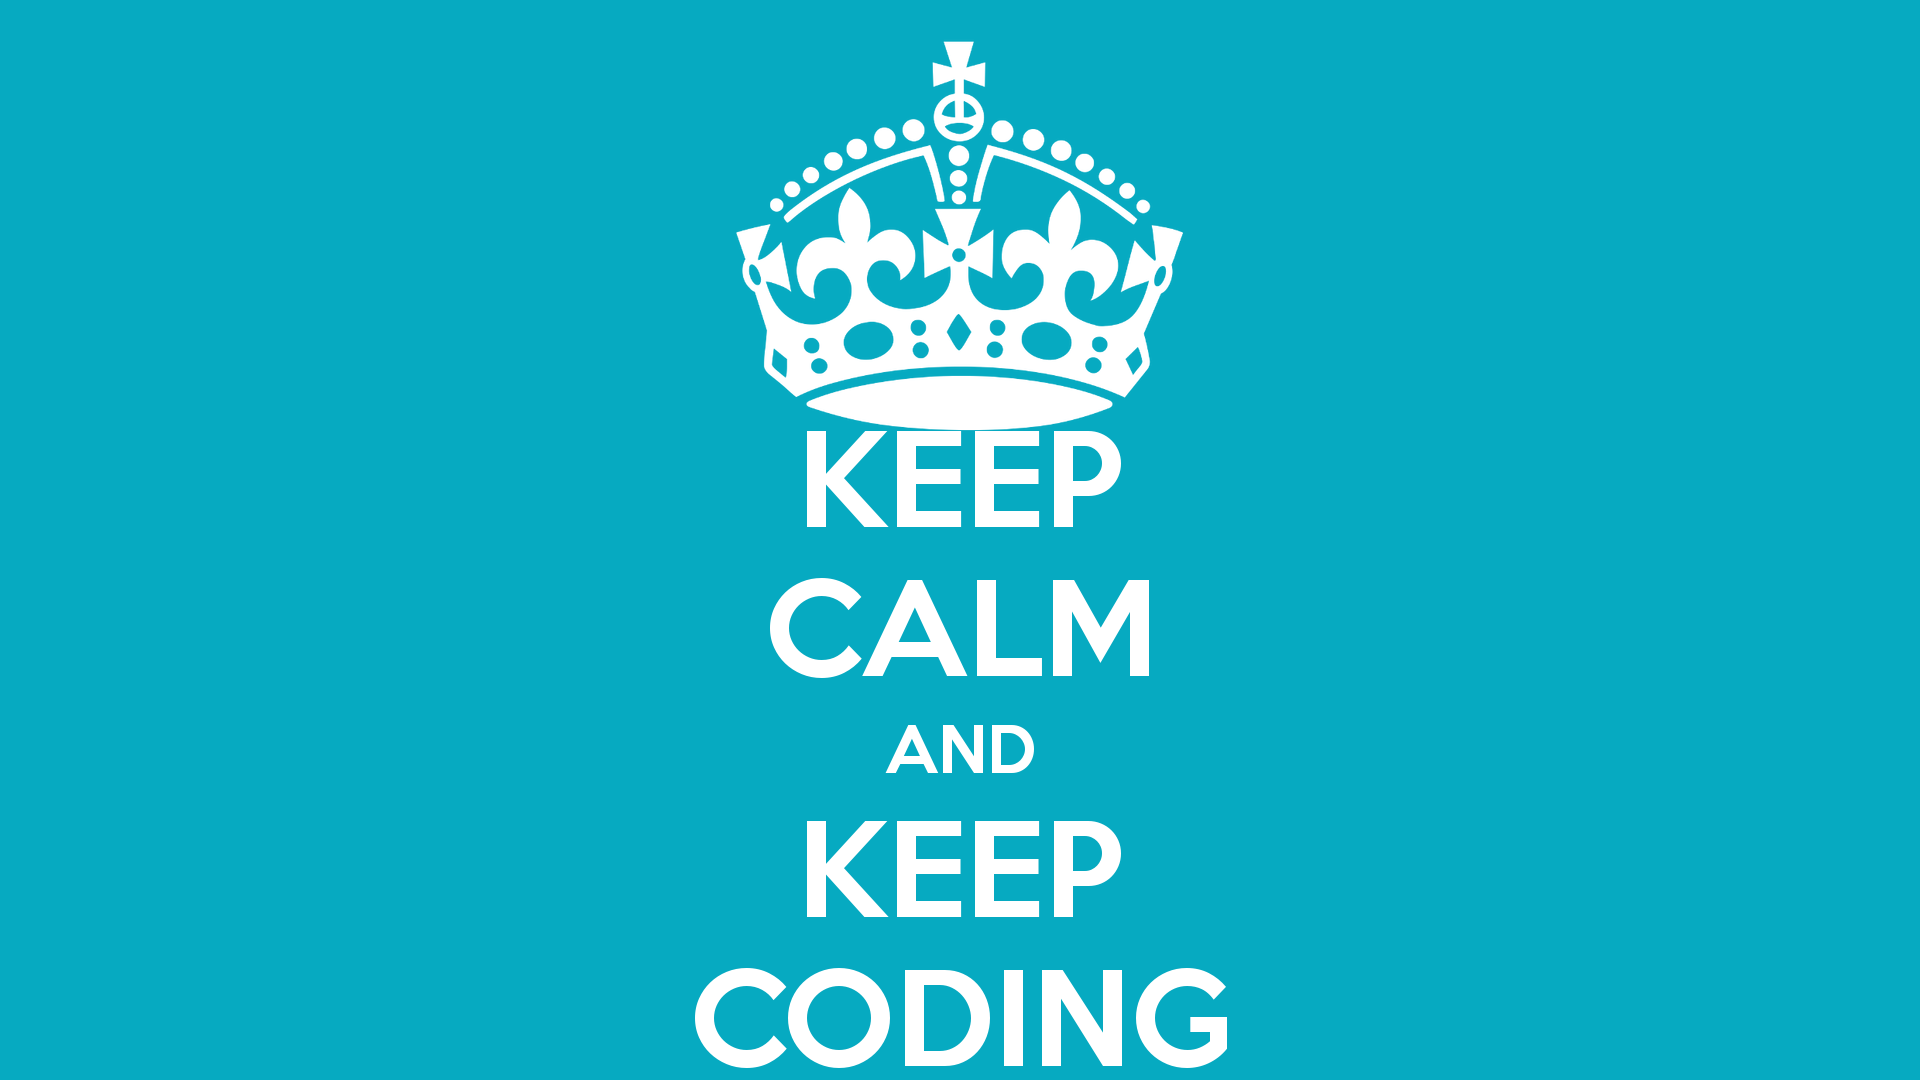 Keep calm and keep coding with code(love)(love)